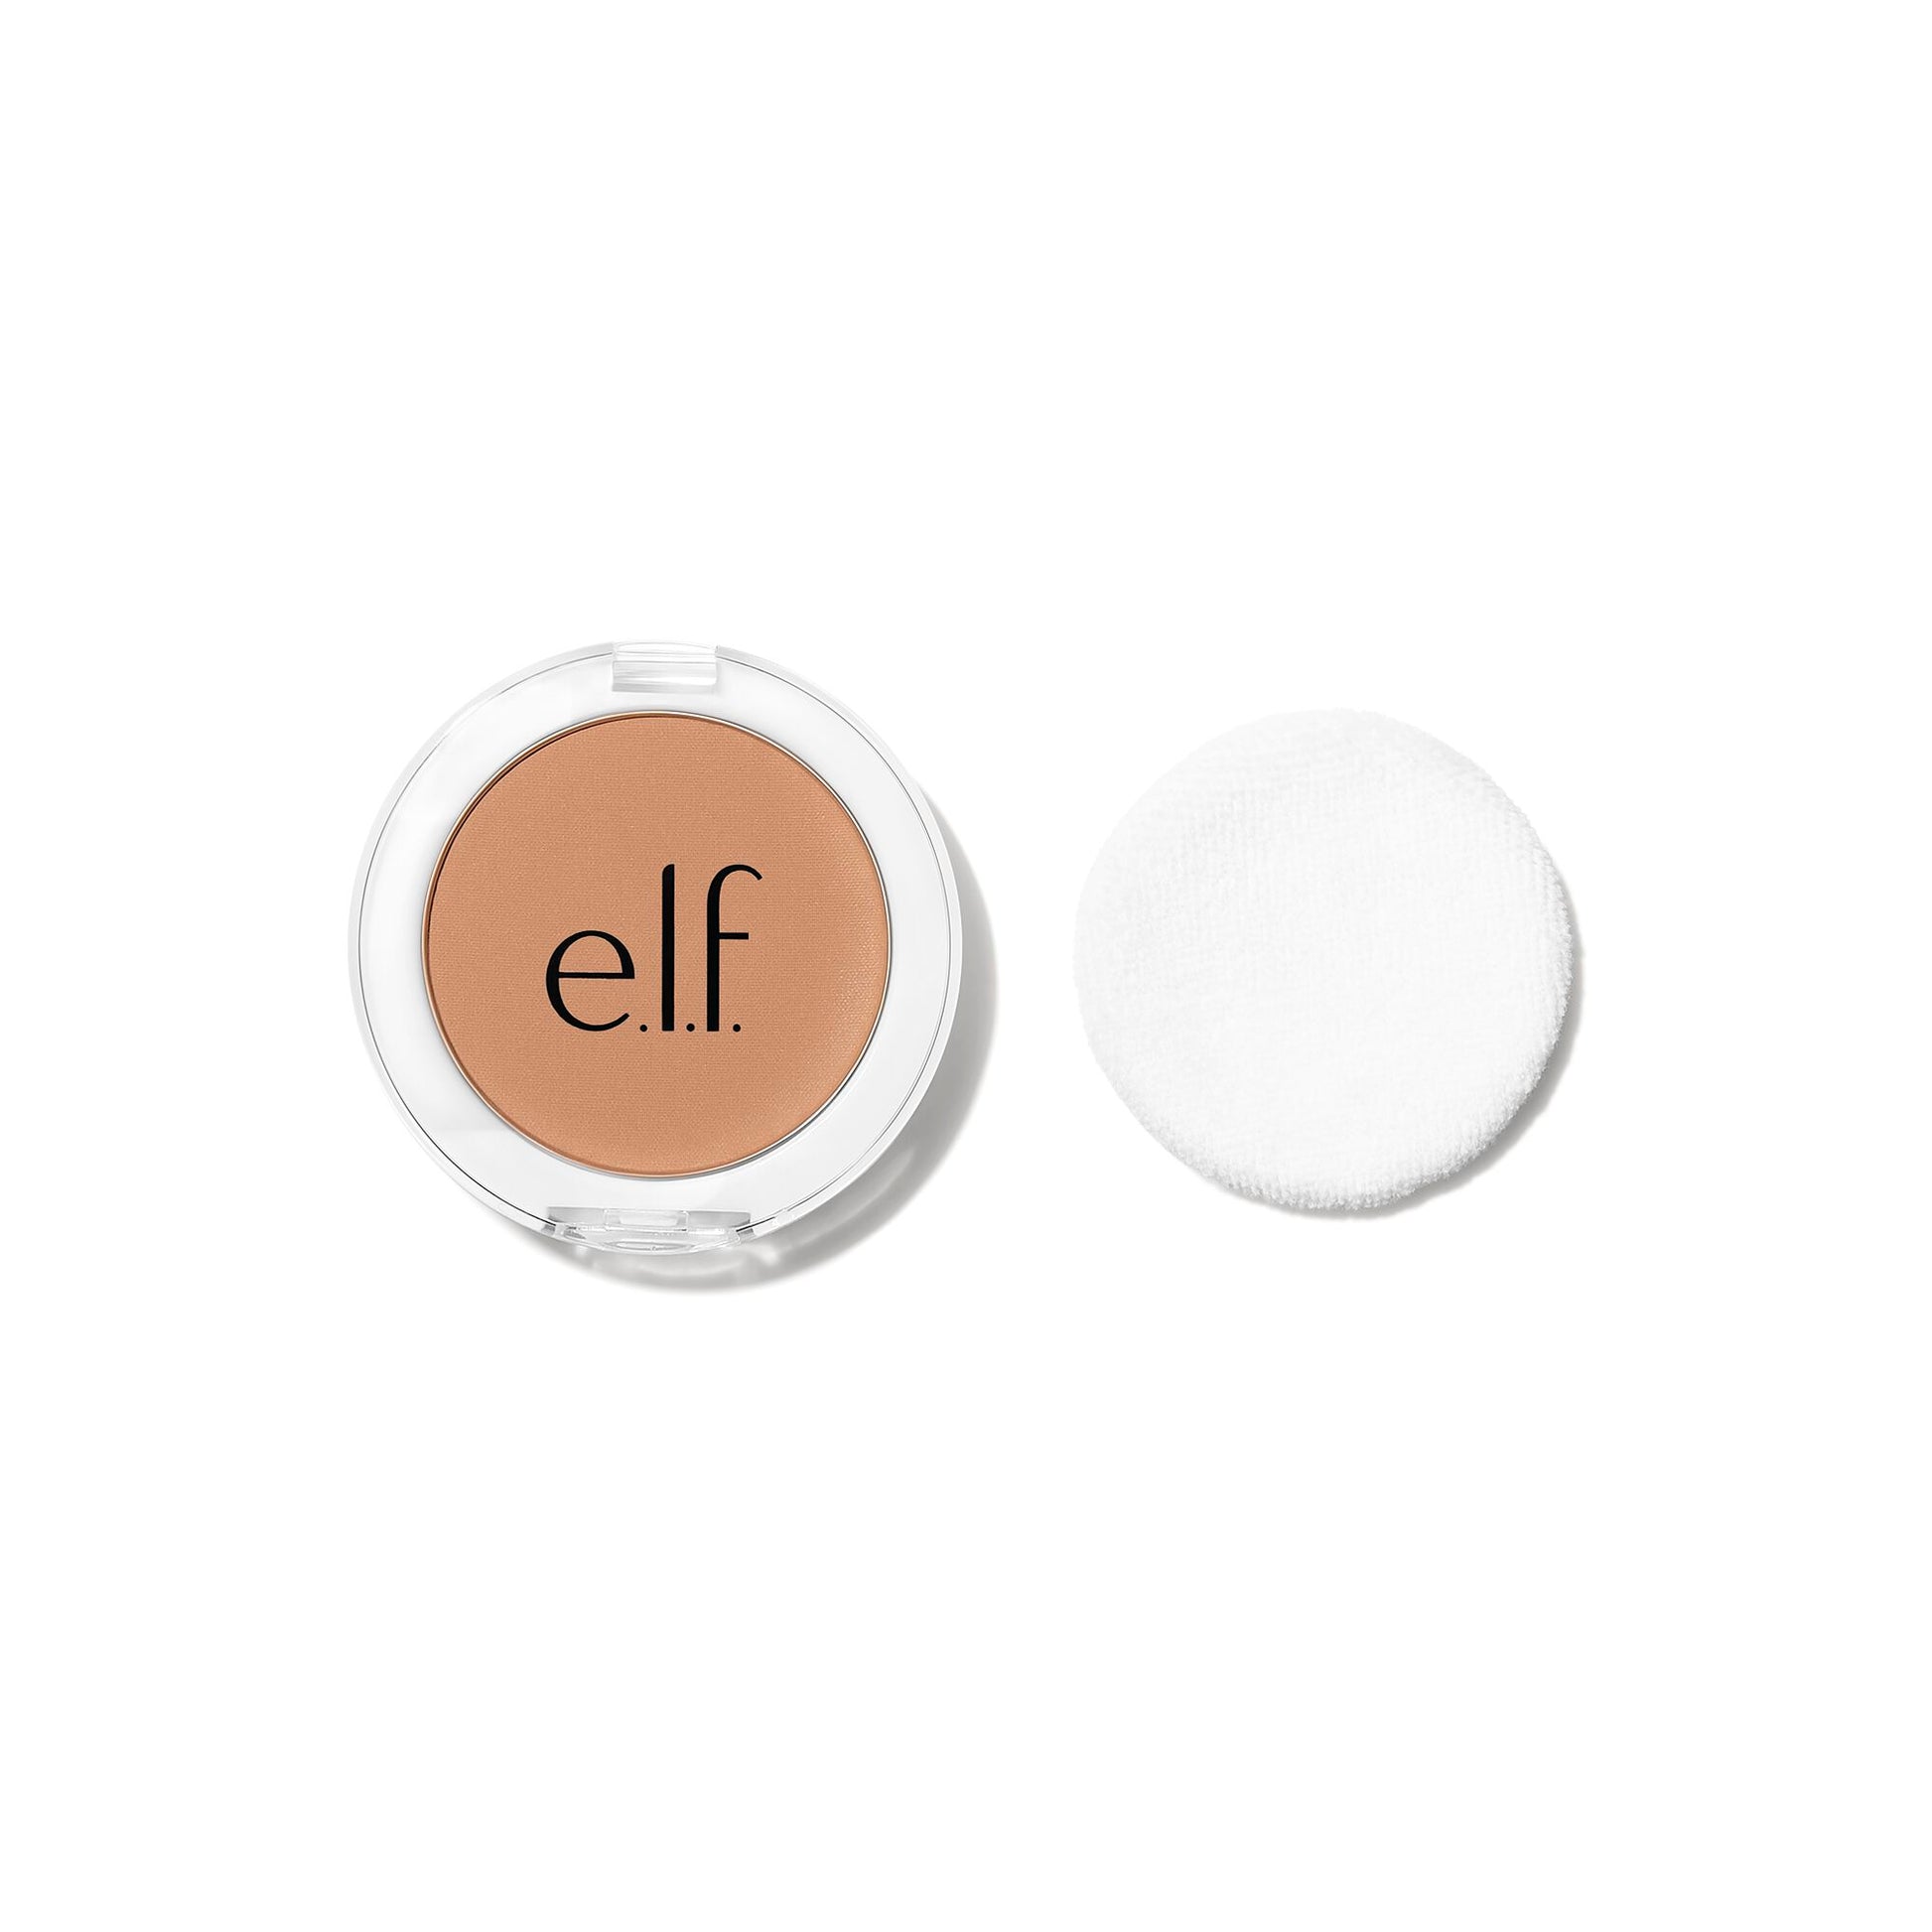 e.l.f Cosmetics Flawless Face Powder- Light Beige, 5g